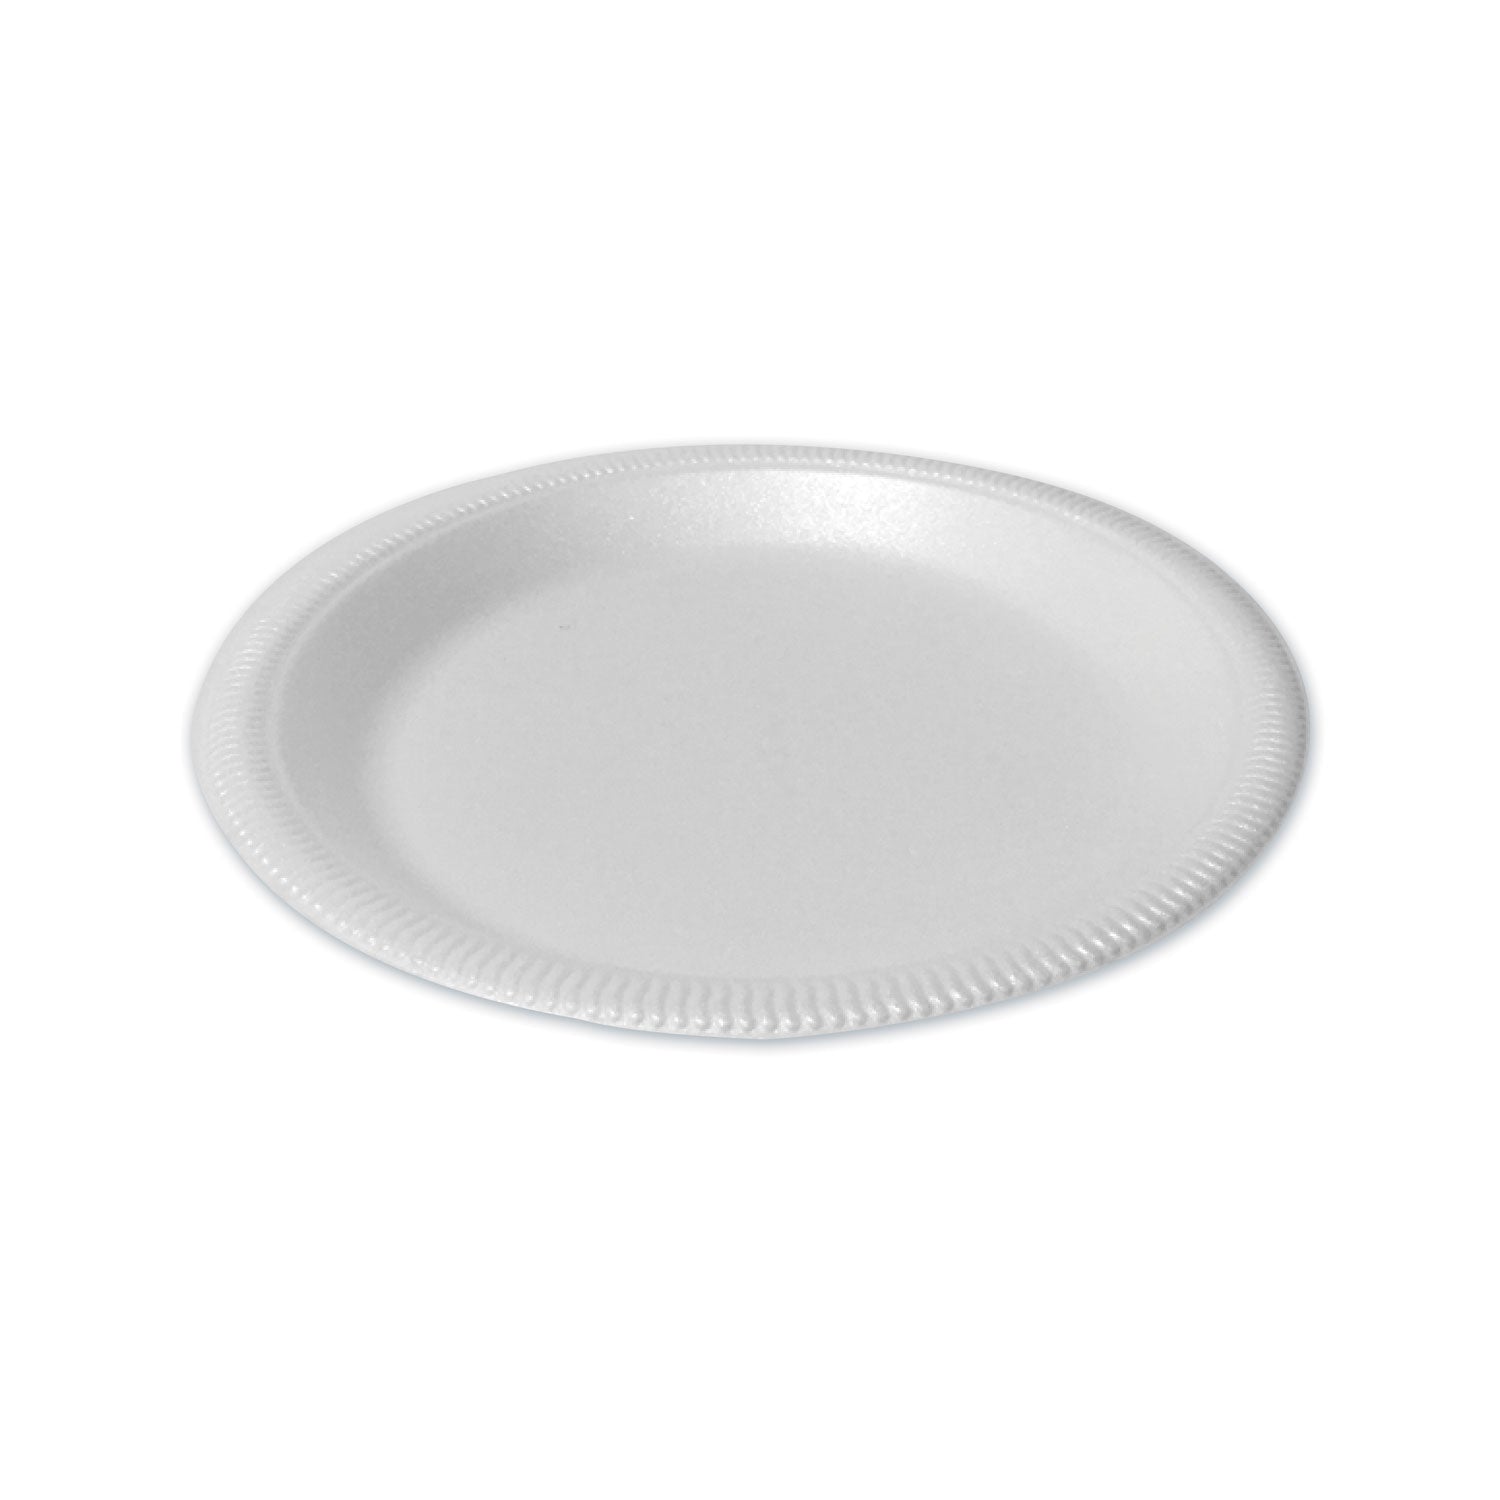 foam-dinnerware-9-dia-poly-bag-white-125-sleeve-4-sleeves-bag-1-bag-pack_pst12040 - 1